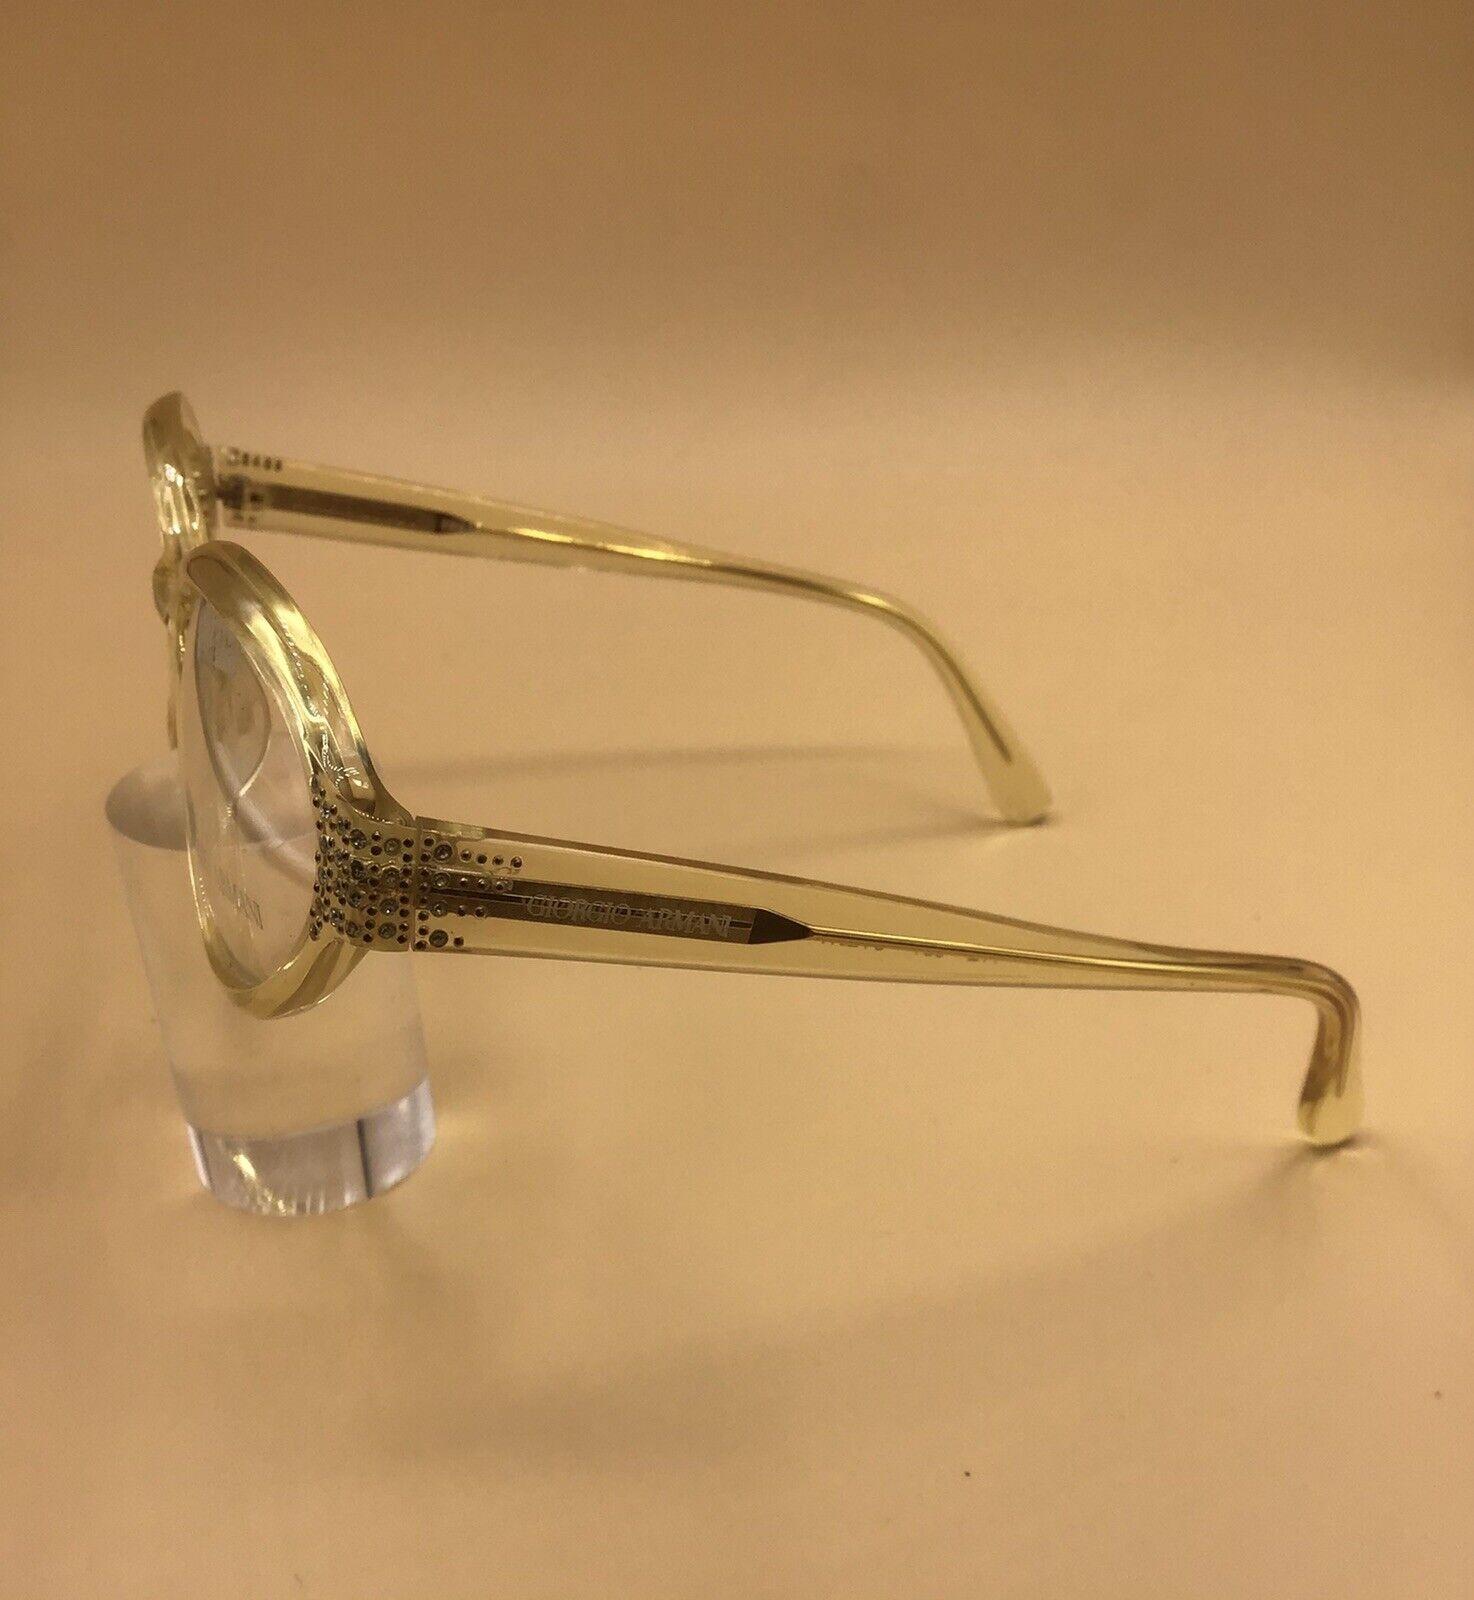 Giorgio Armani Occhiale Vintage Eyewear Frame Brillen Lunettes model 412 031